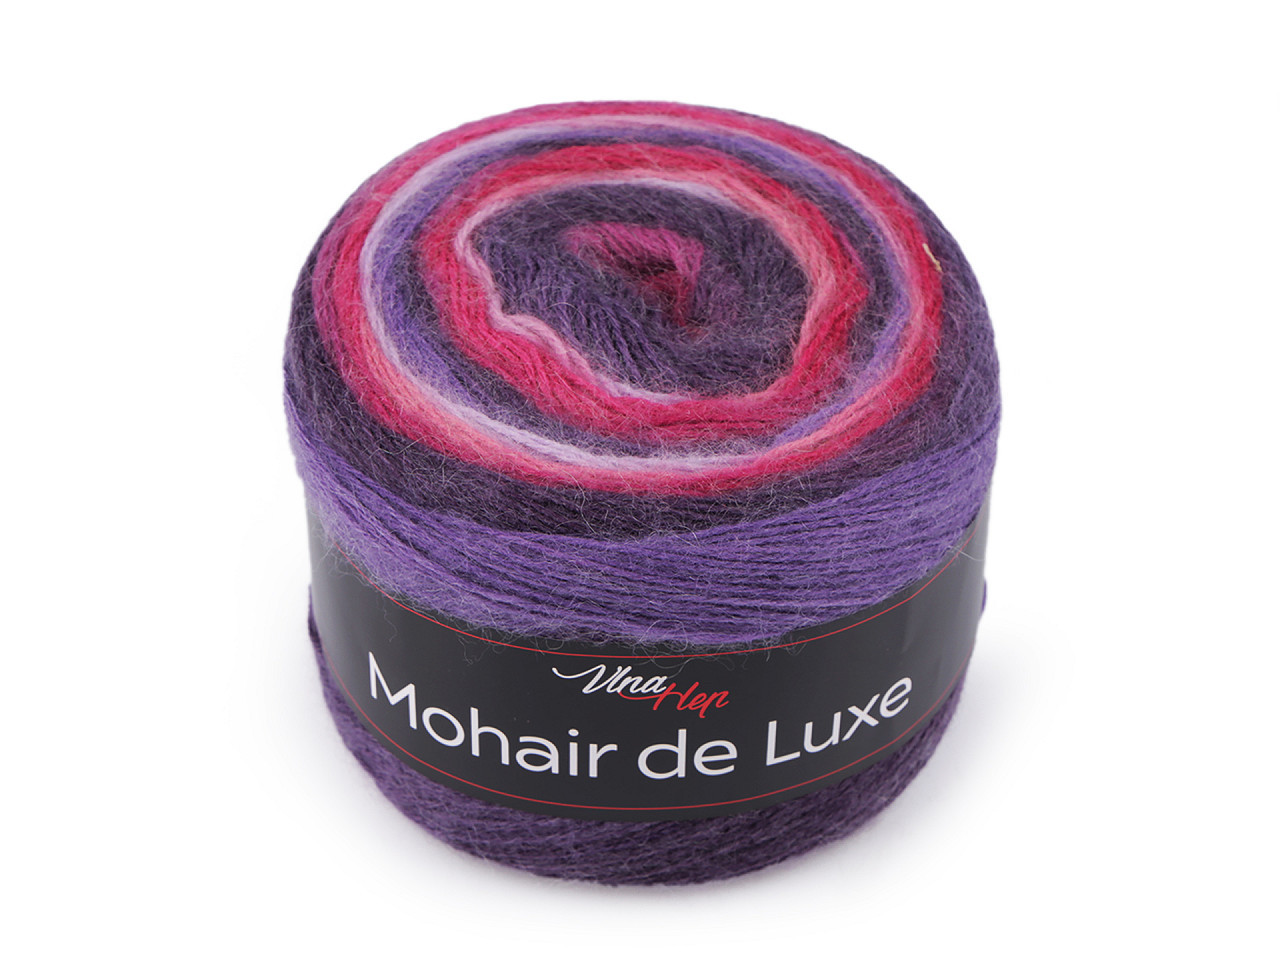 Pletací příze Mohair de Luxe 150 g, barva 2 (7404) fialová